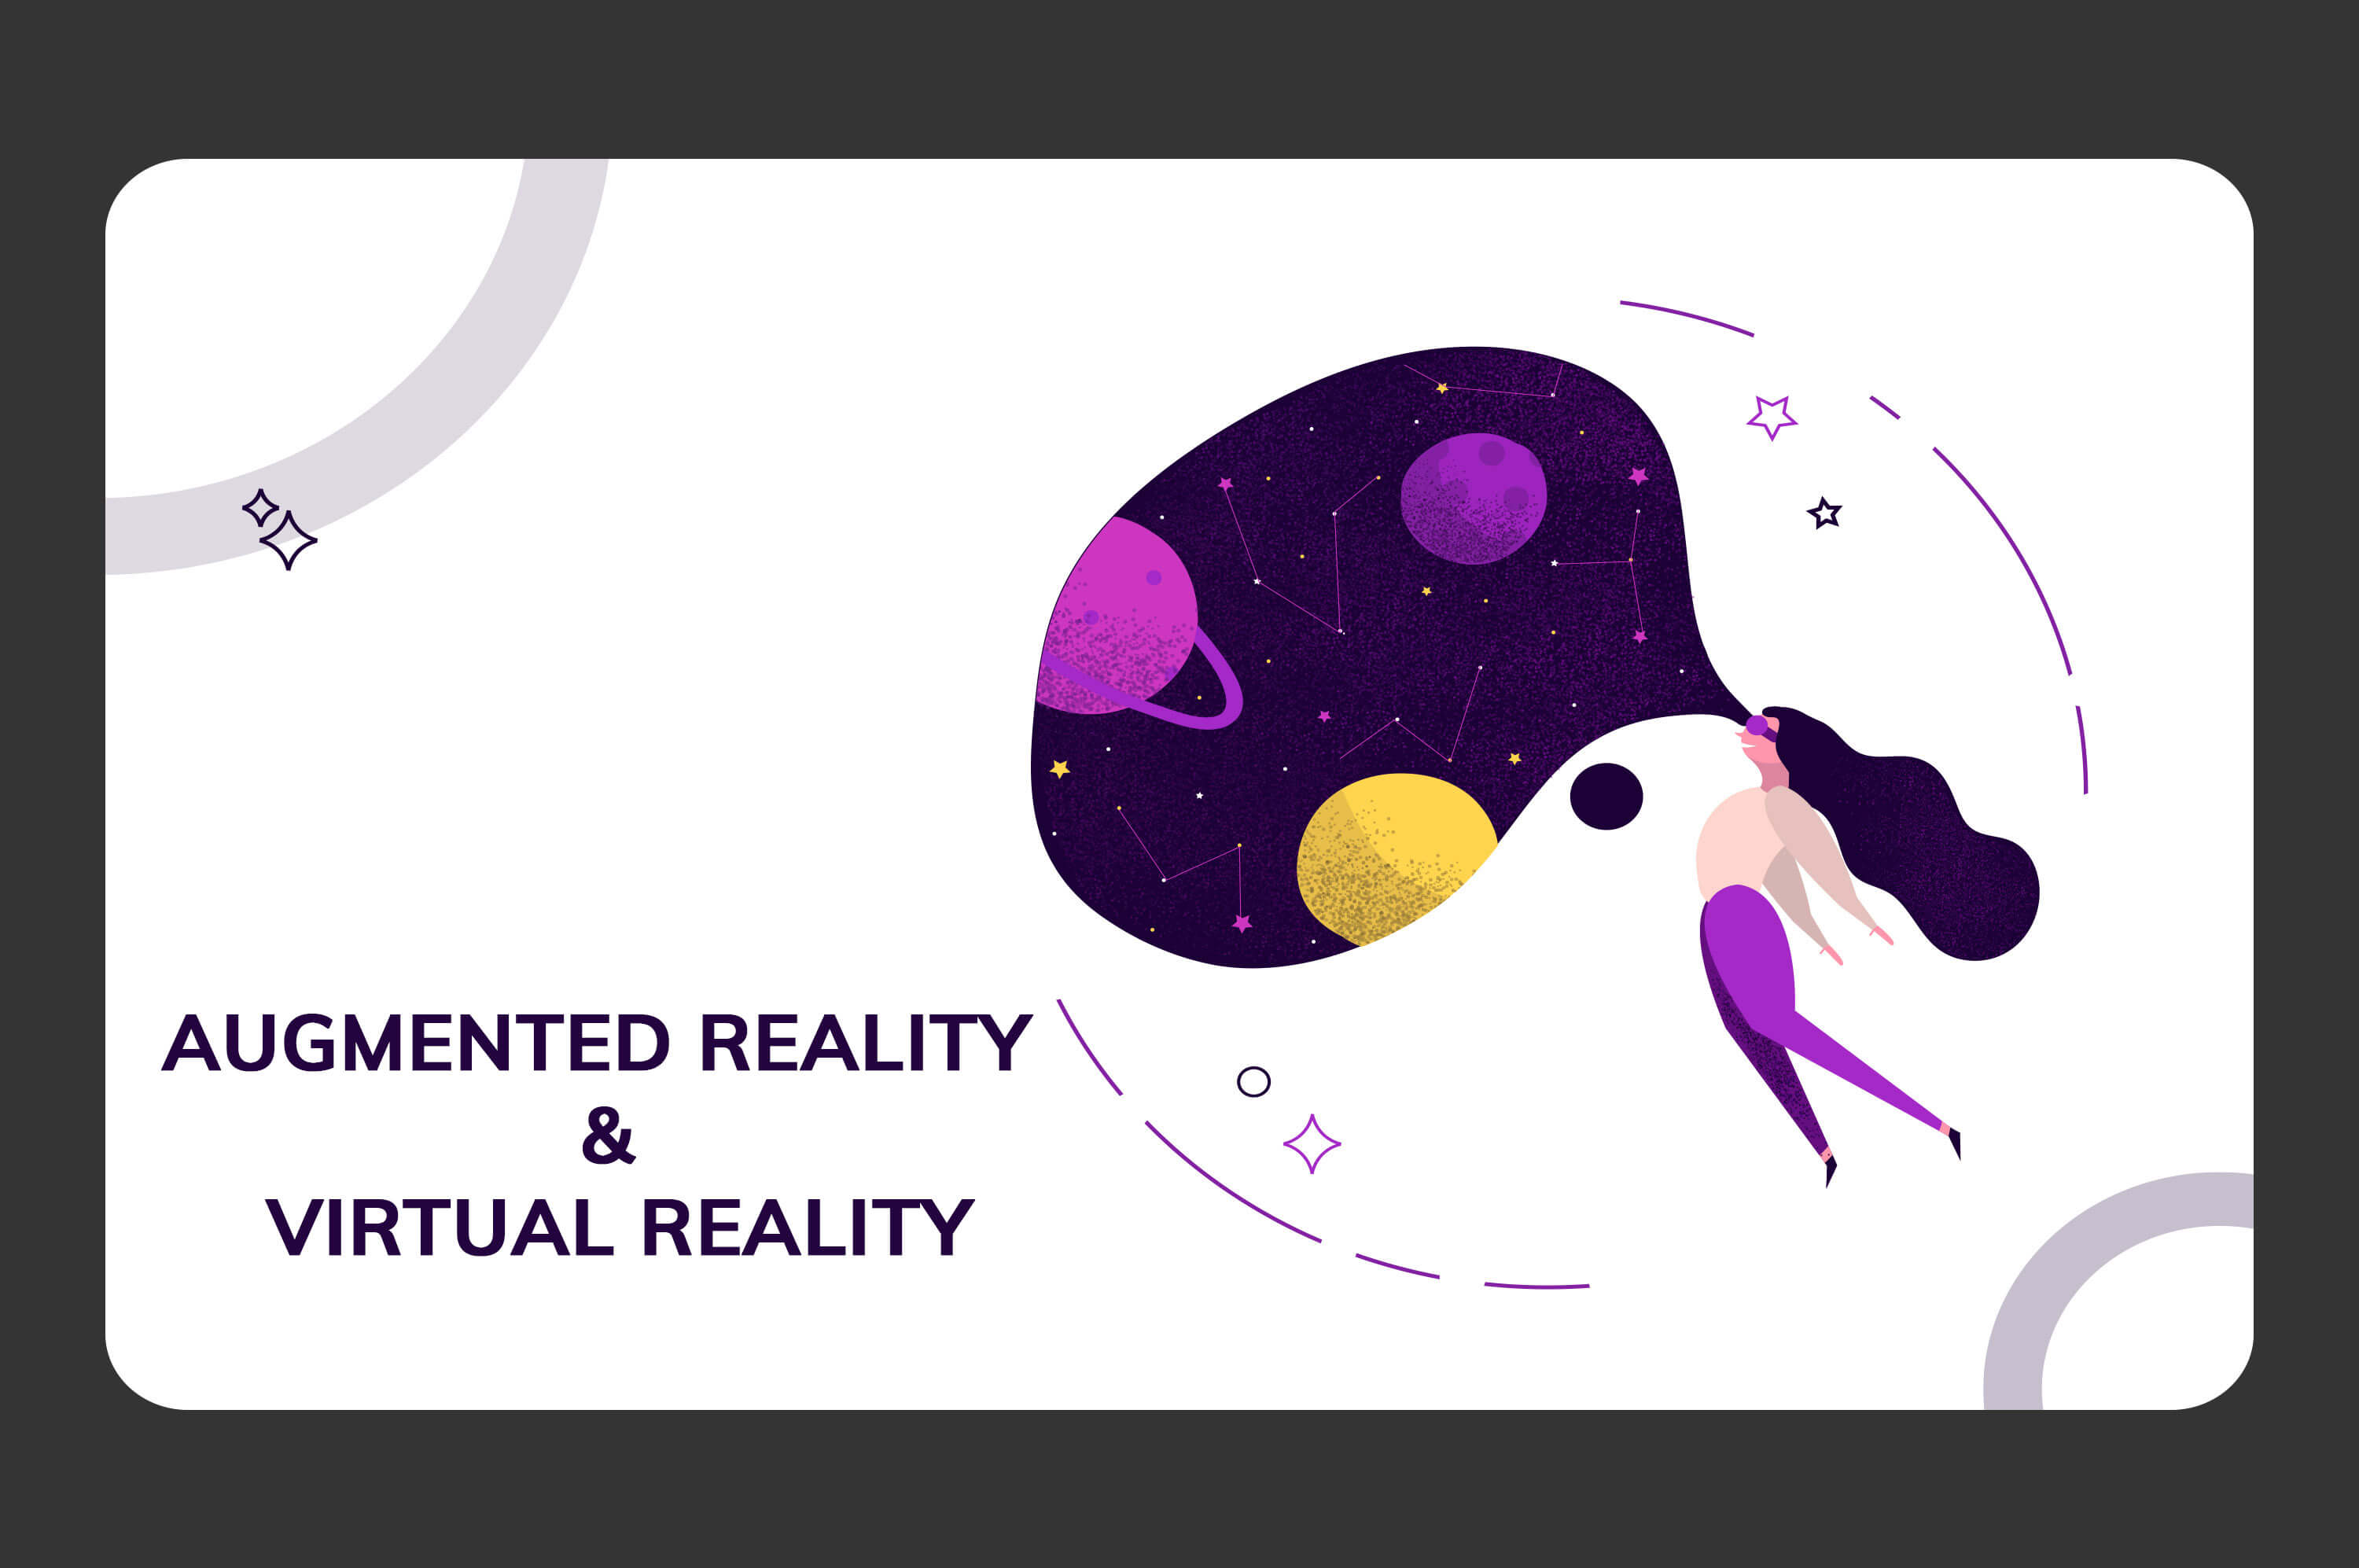 Augmented reality & Virtual reality